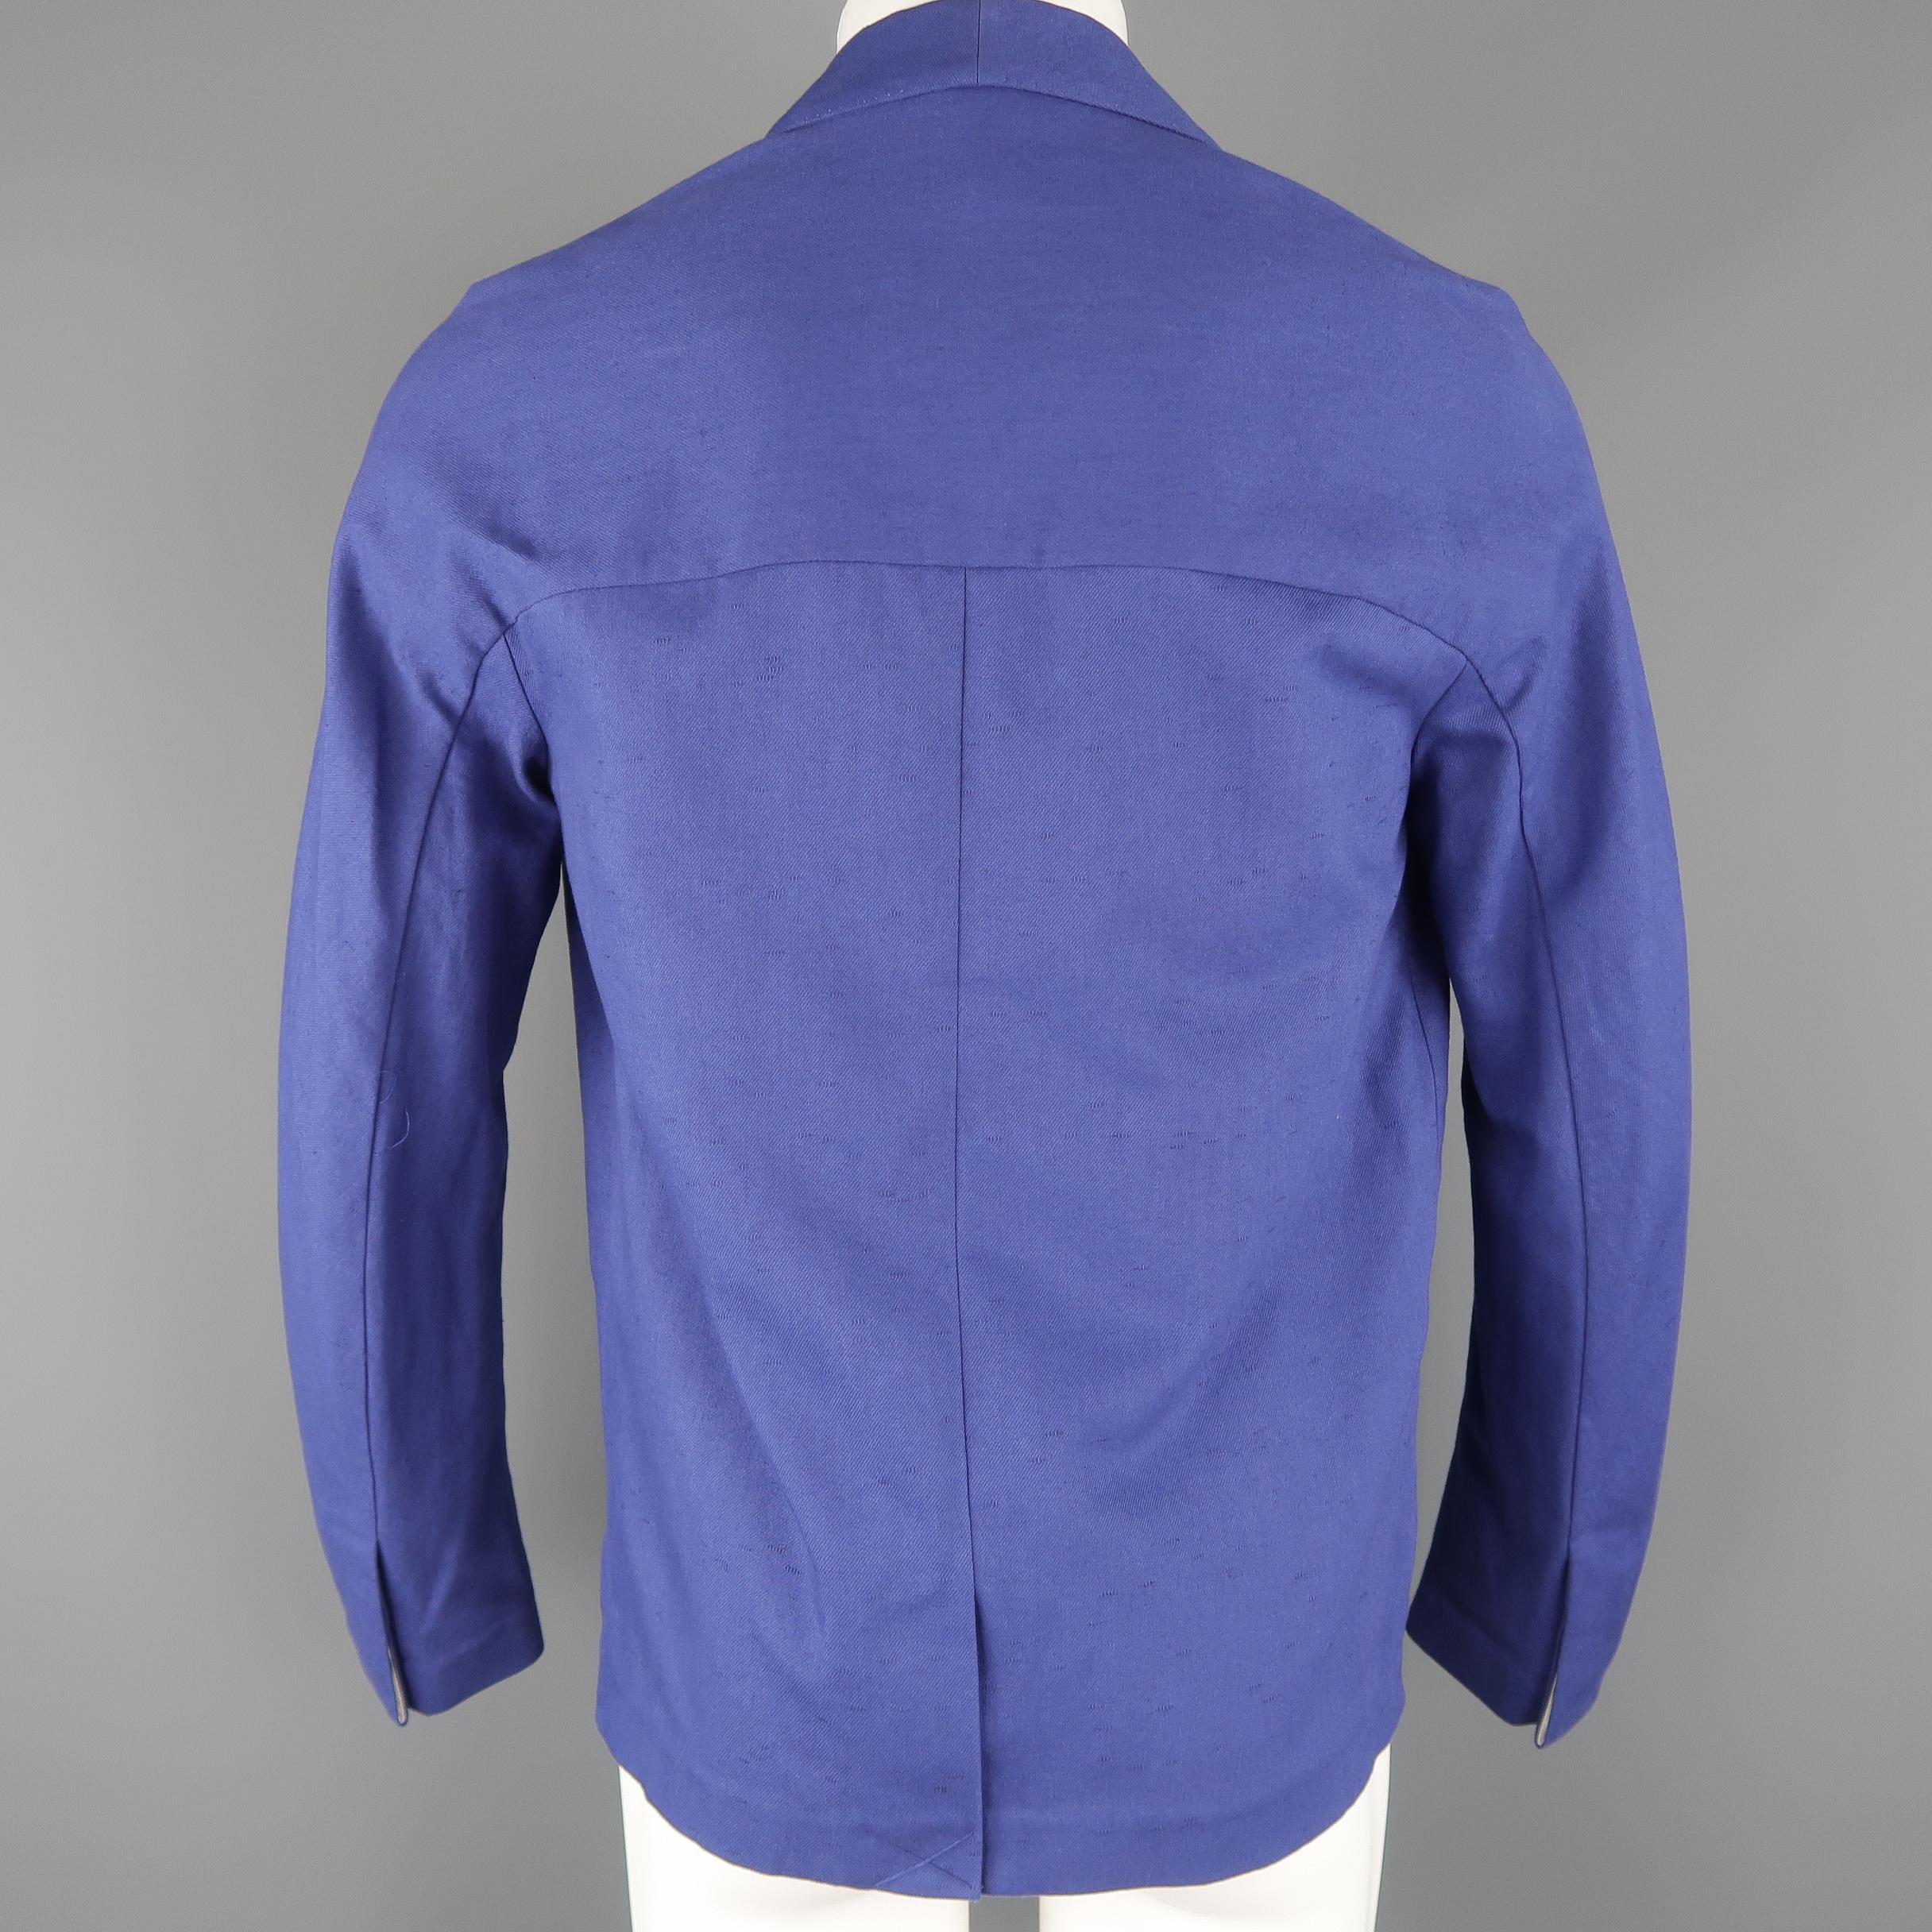 3.1 Phillip Lim Blue Cotton / Linen Shawl Collar Jacket / Sport Coat 1